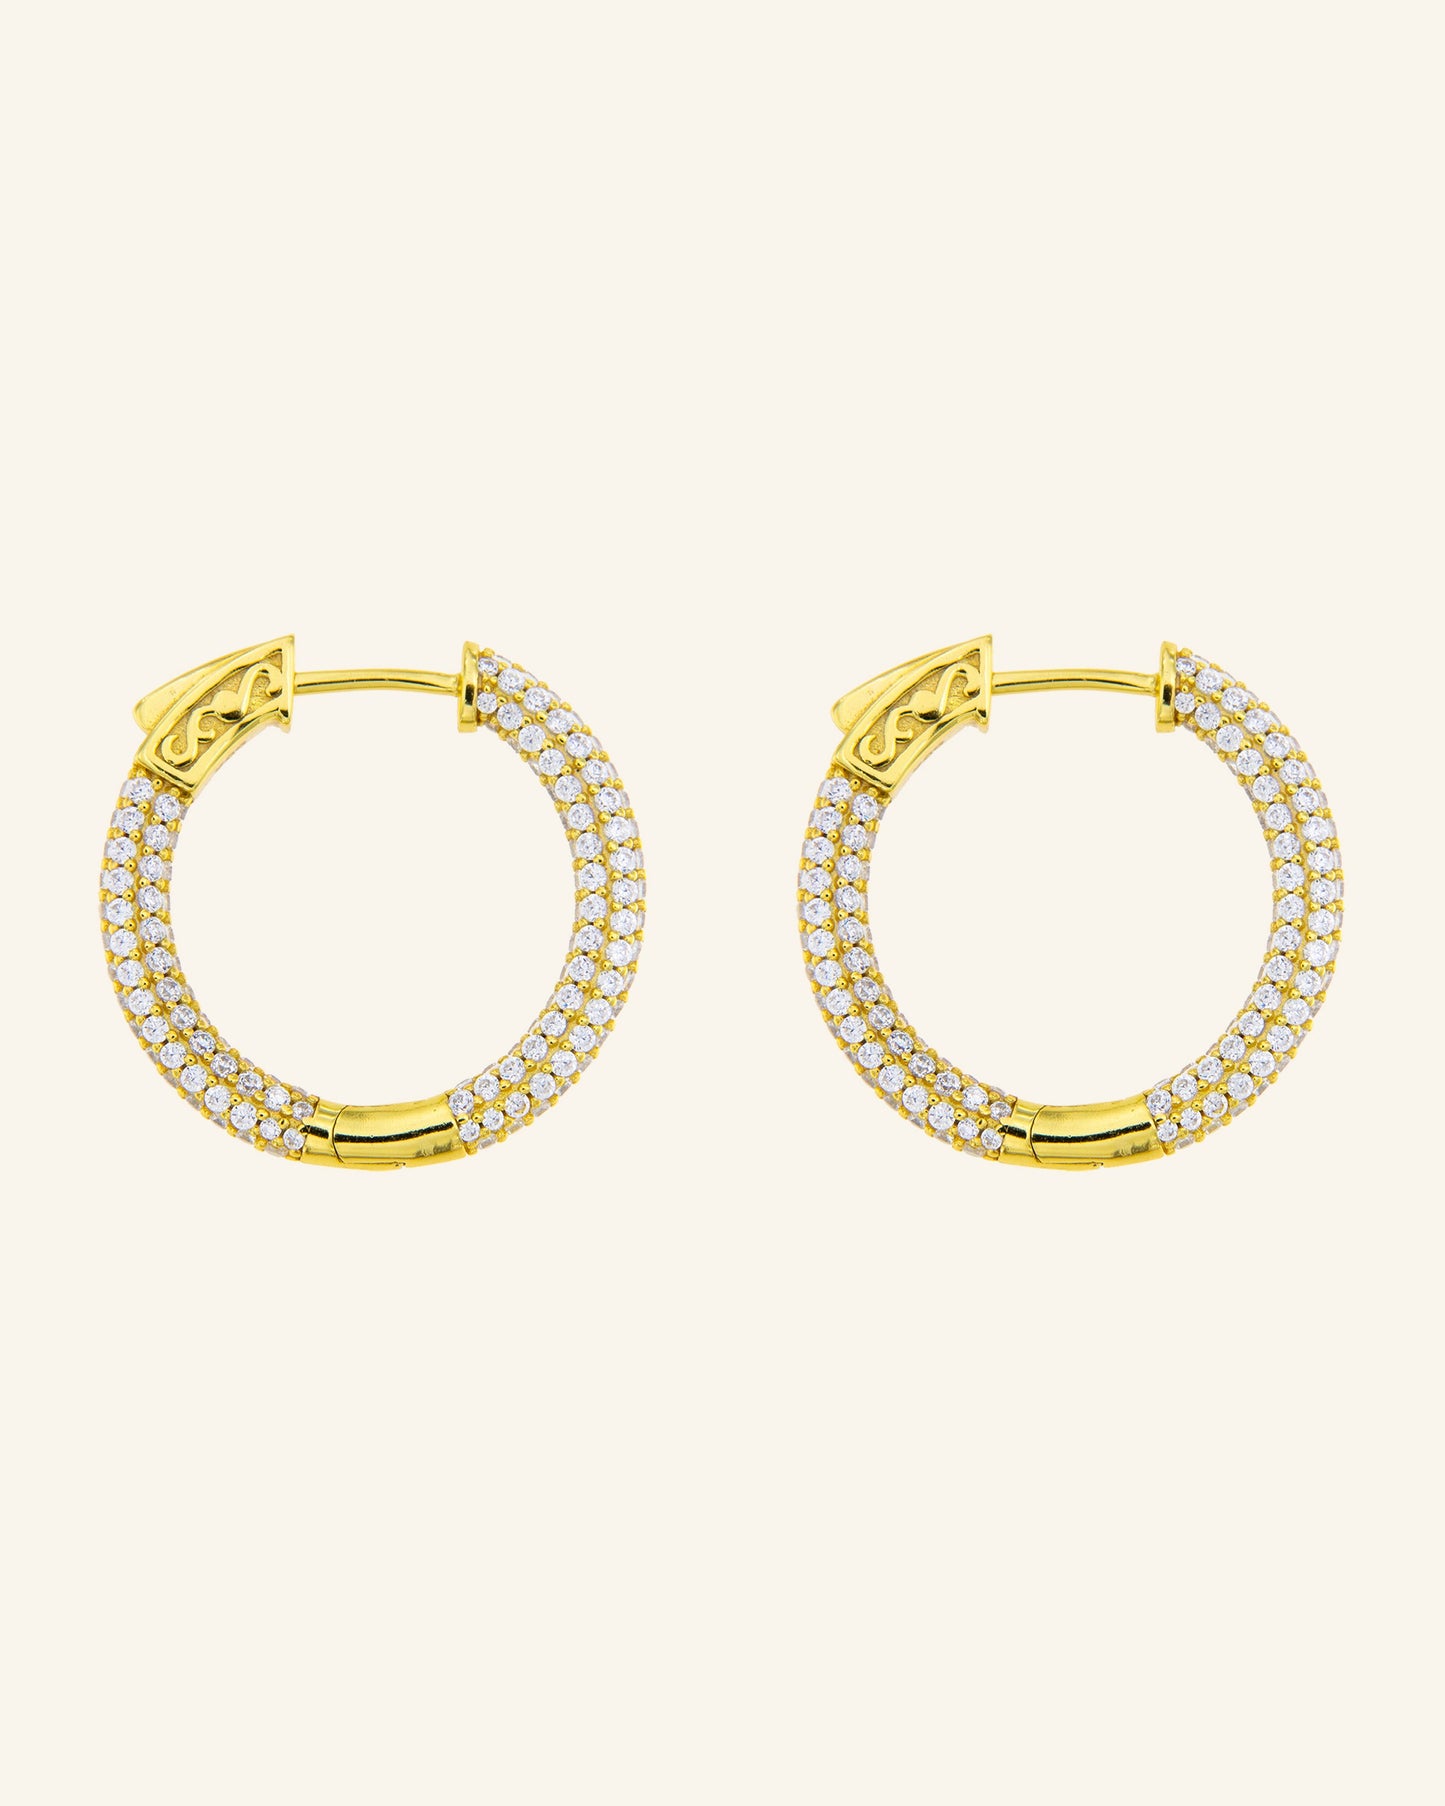 Venus 3DP gold earrings with zircons